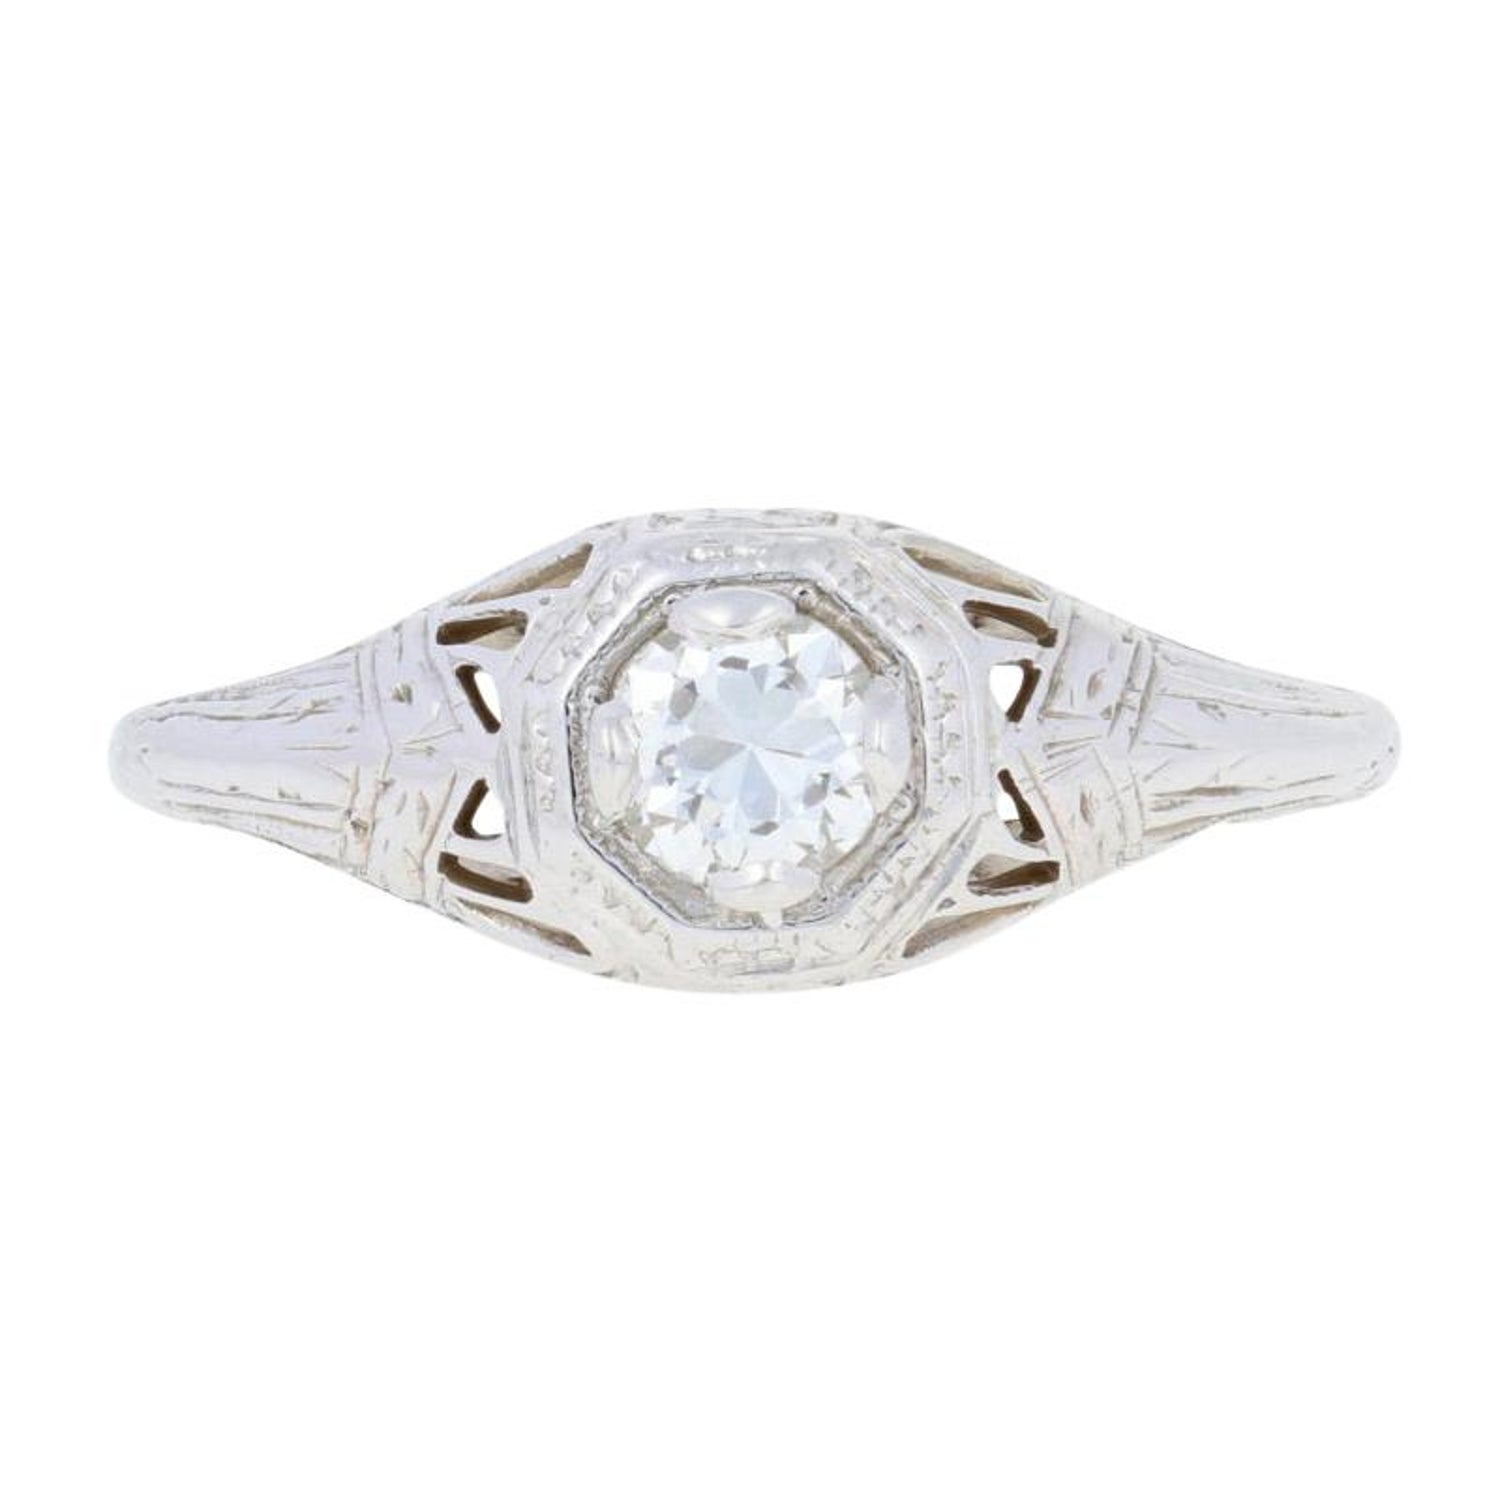 Vintage Art Deco Circa 1930 Diamond Solitaire Platinum and 18 Karat Gold Ring Size 4 34